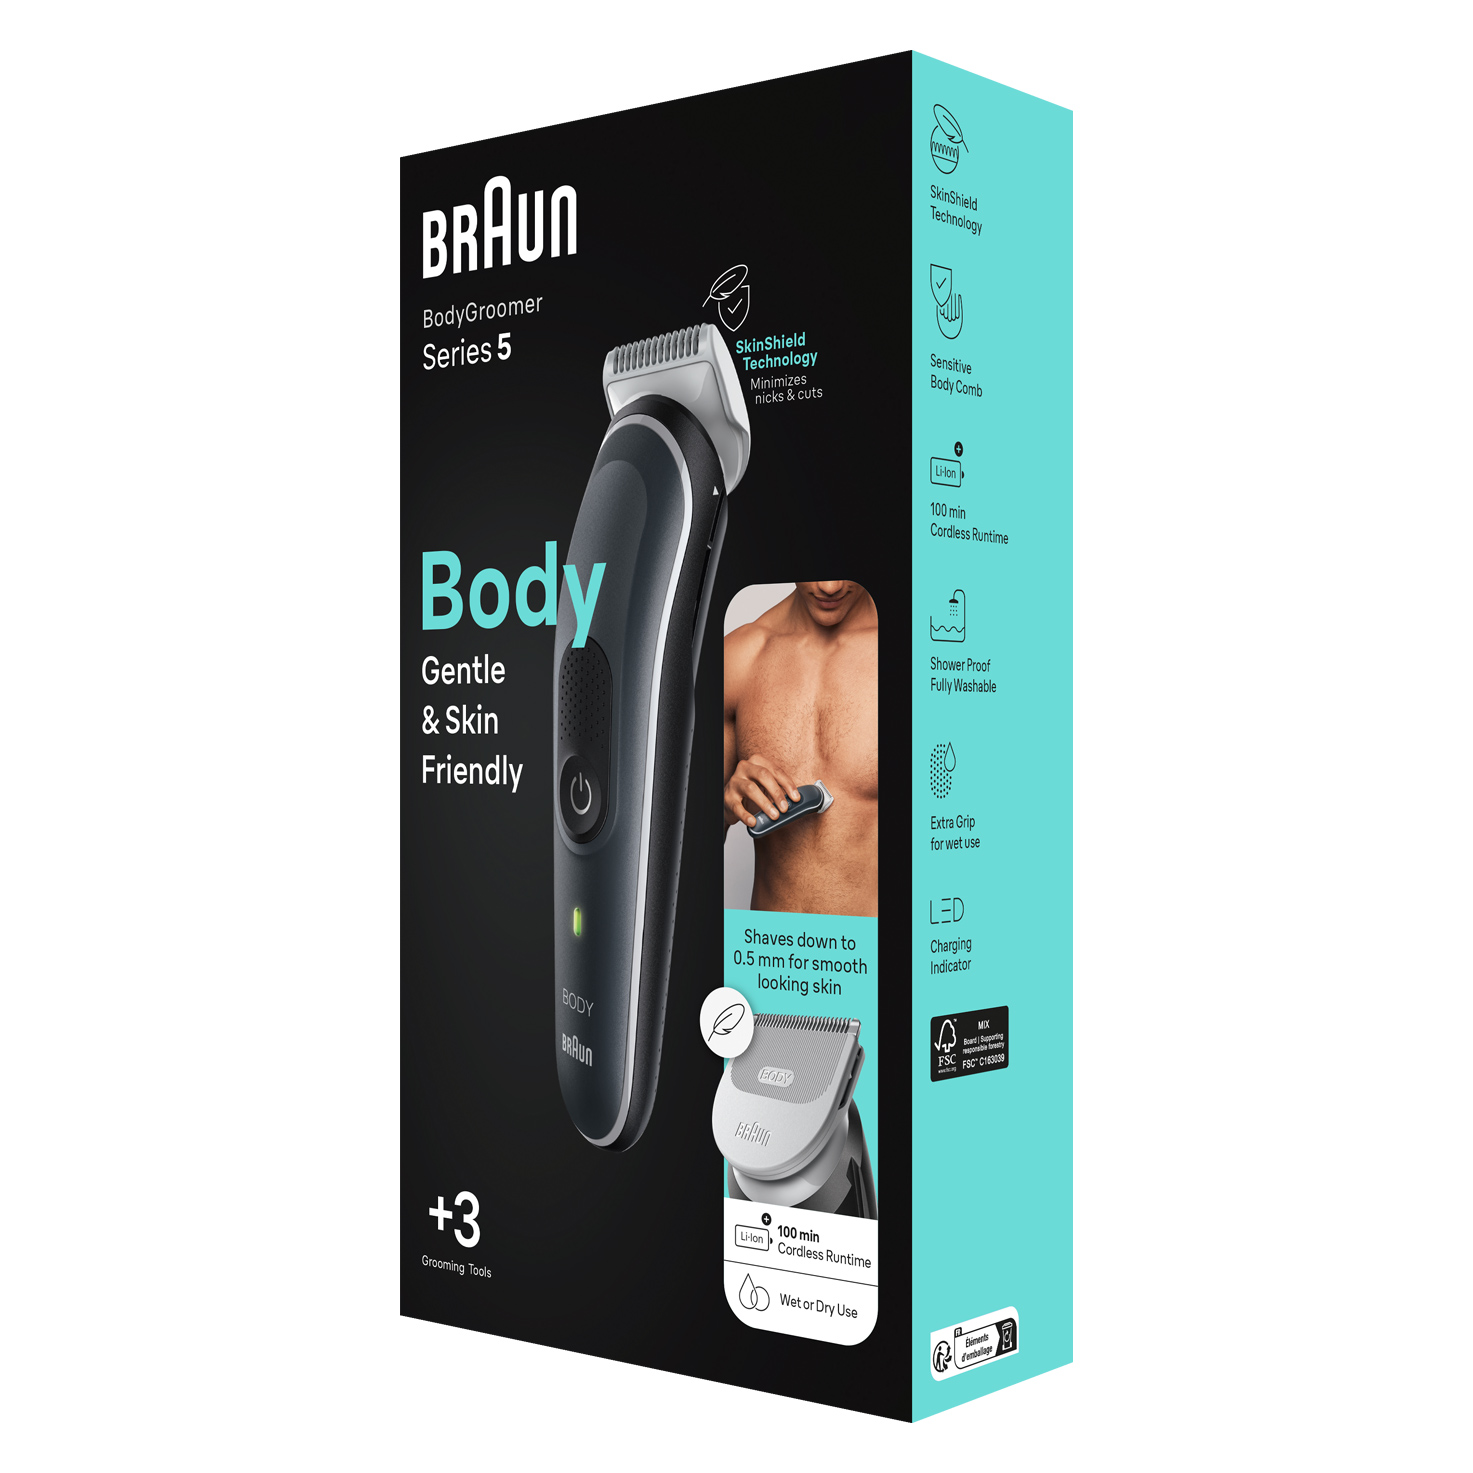 Braun BG5340 body groomer | Wet & dry body grooming | Braun SG